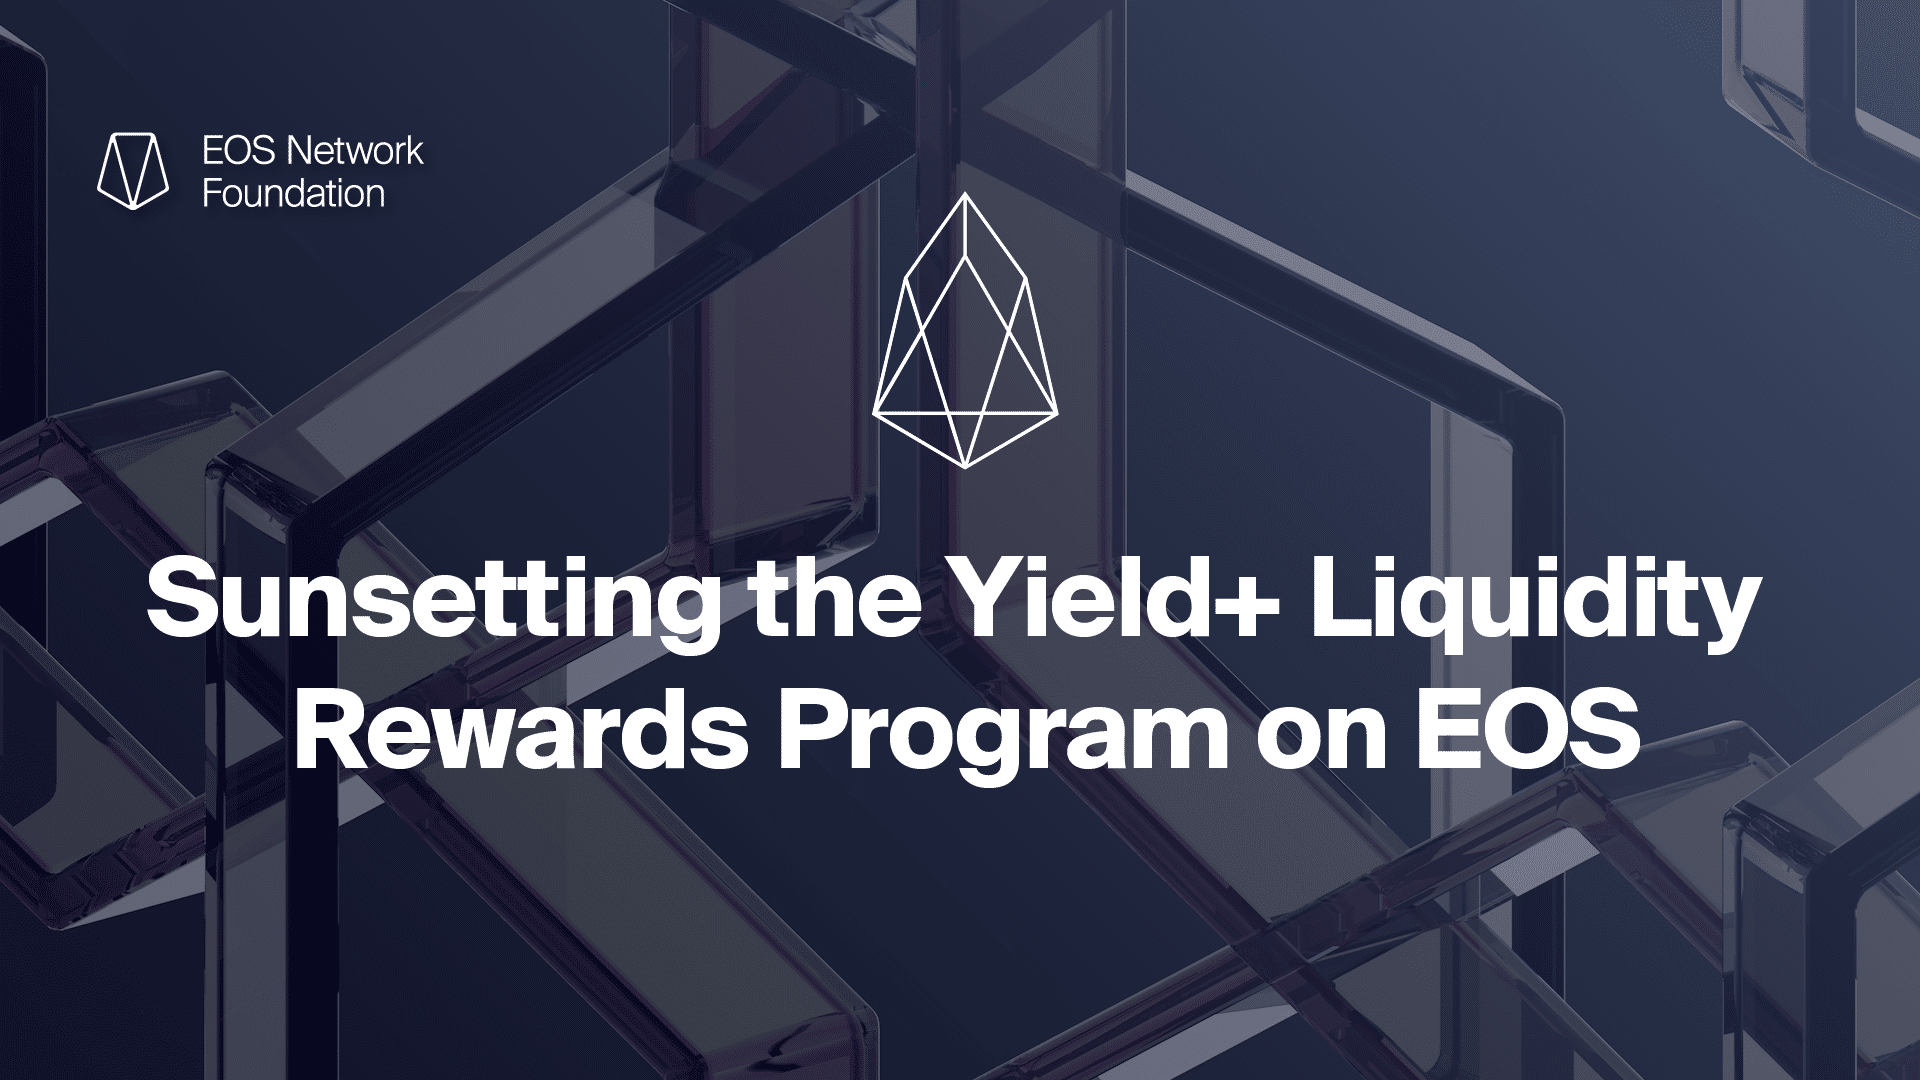 Sunsetting The Yield+ Liquidity Rewards Program on EOS